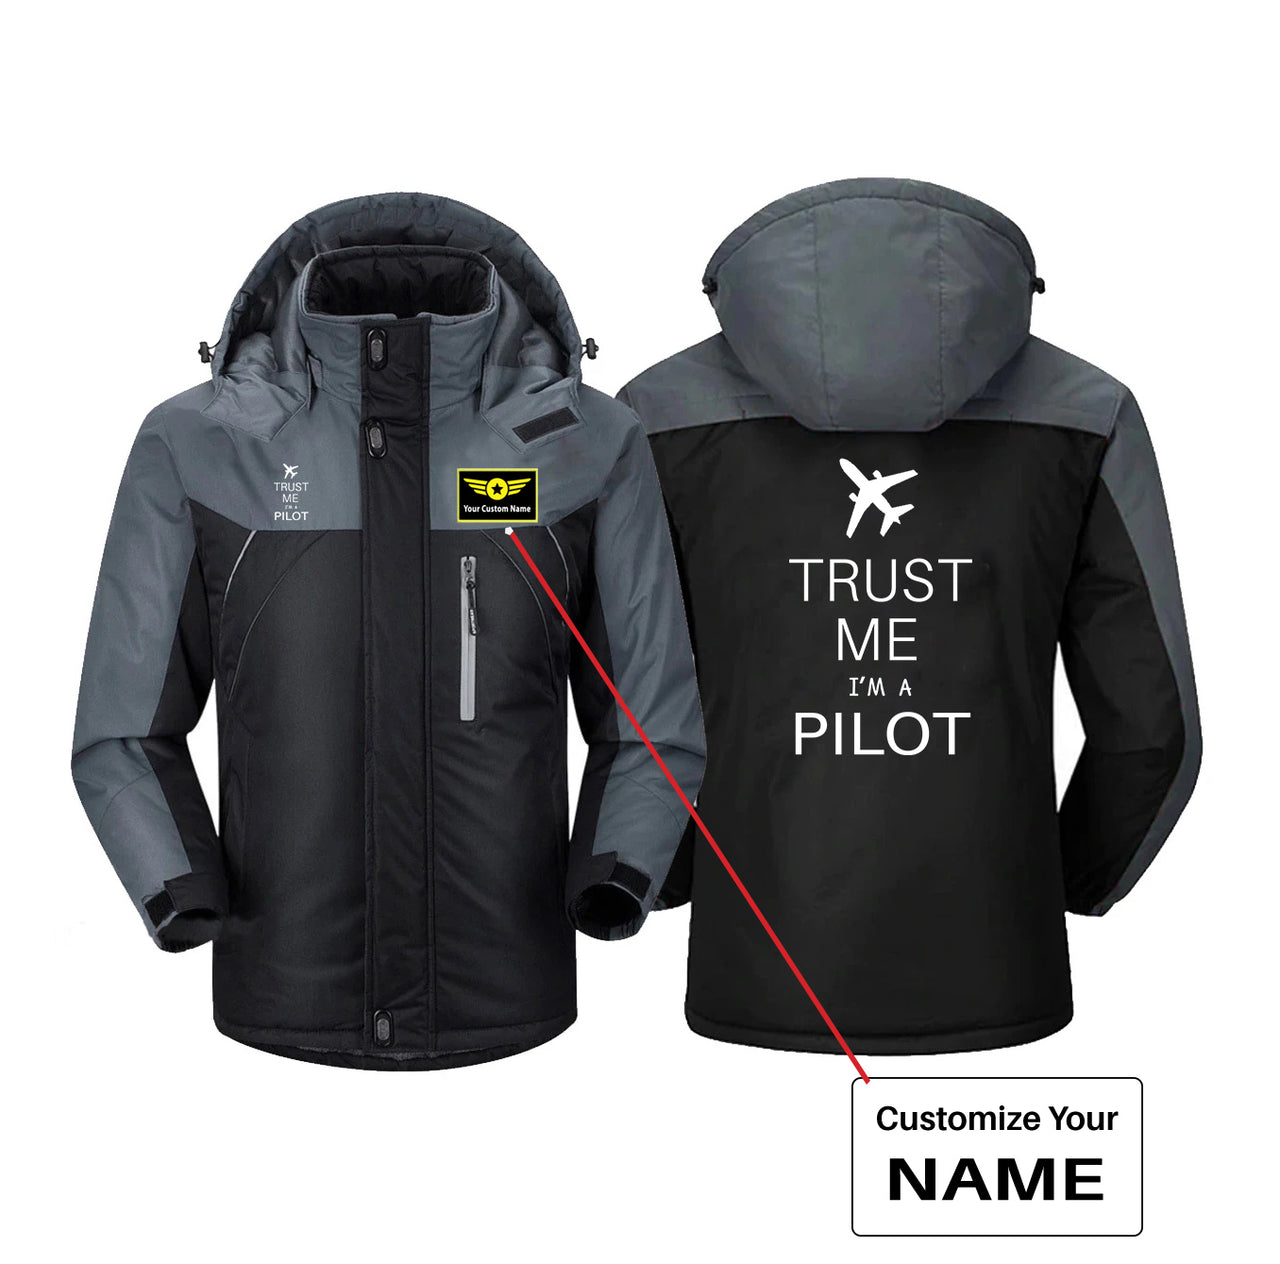 Trust Me I'm a Pilot 2 Designed Thick Winter Jackets